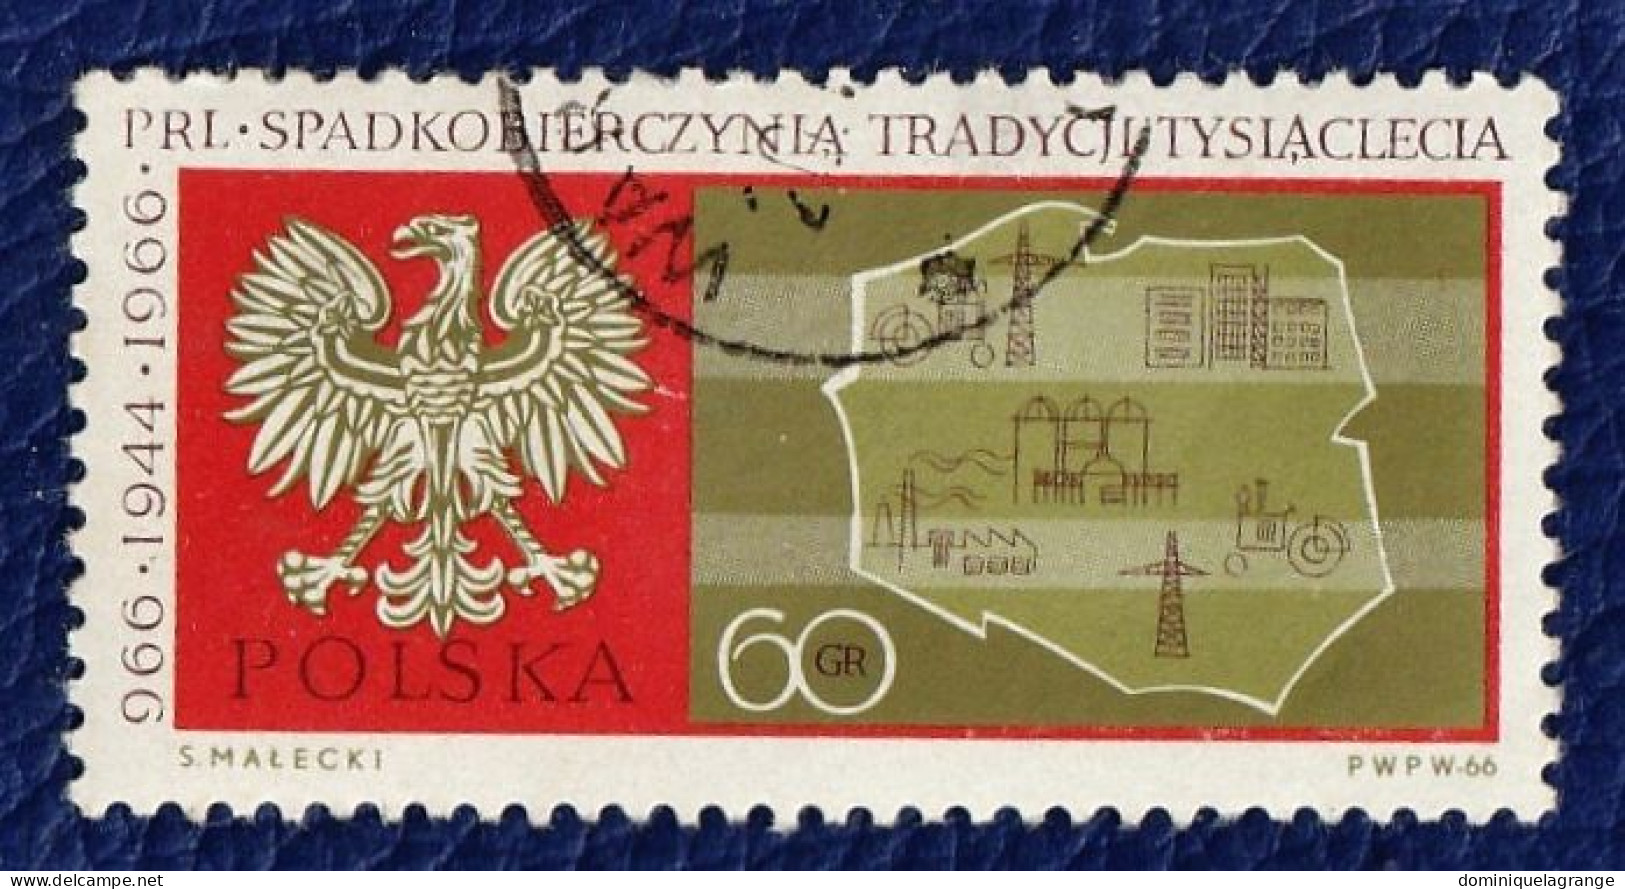 10 timbres de Pologne "armoiries" de 1950 à 1966